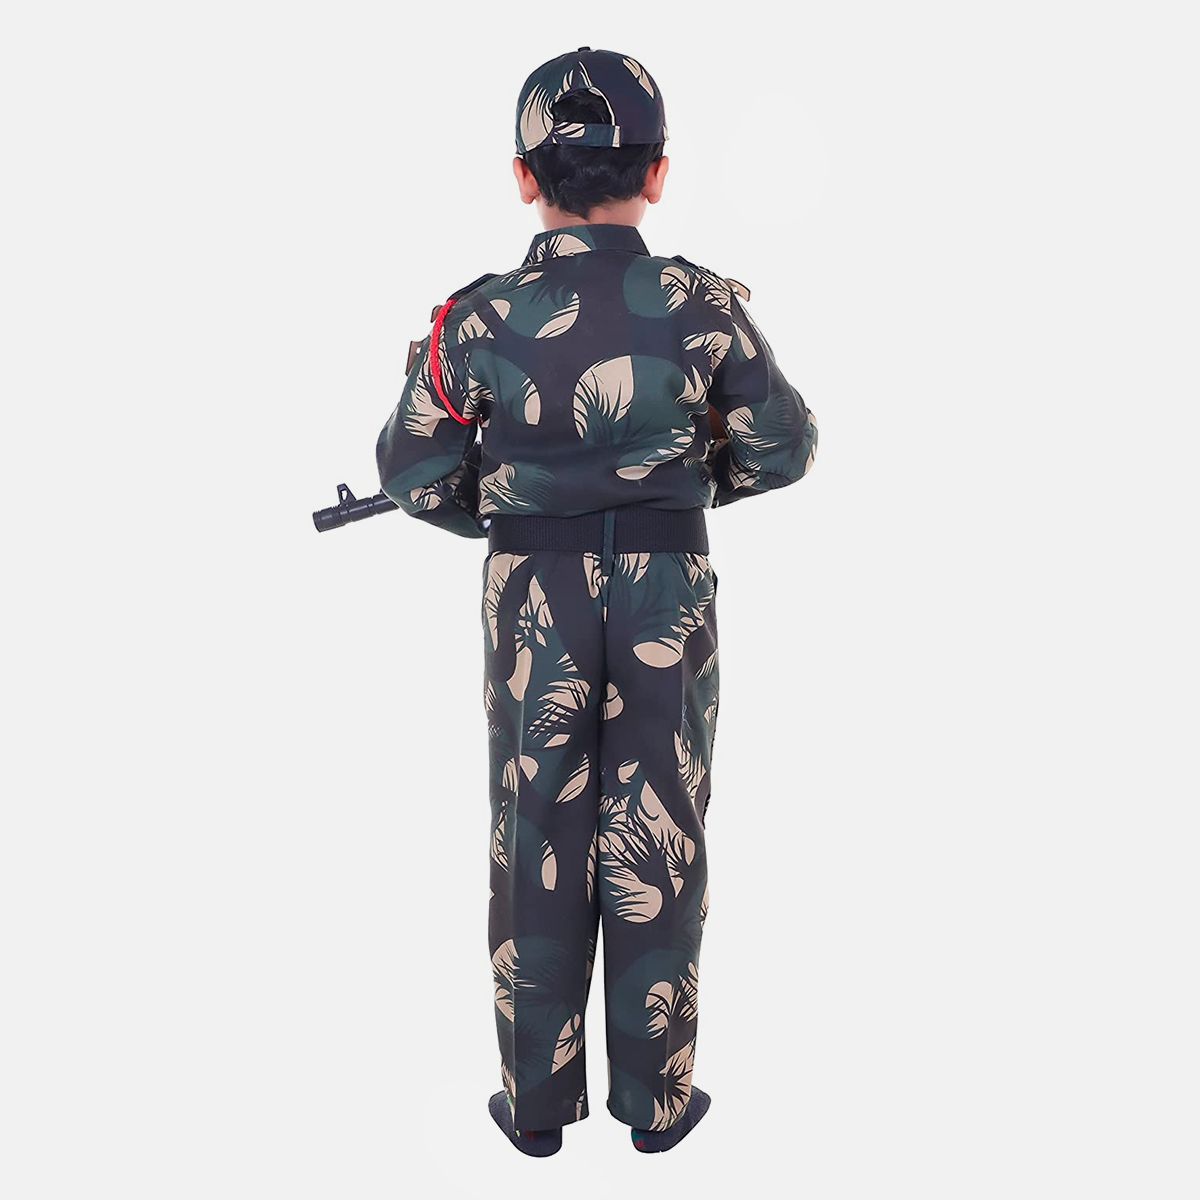 ARMY BOY COSTUME SOLDIER CHILDS MILITARY CAMOUFLAGE UNIFORM NEW FANCY DRESS  | eBay